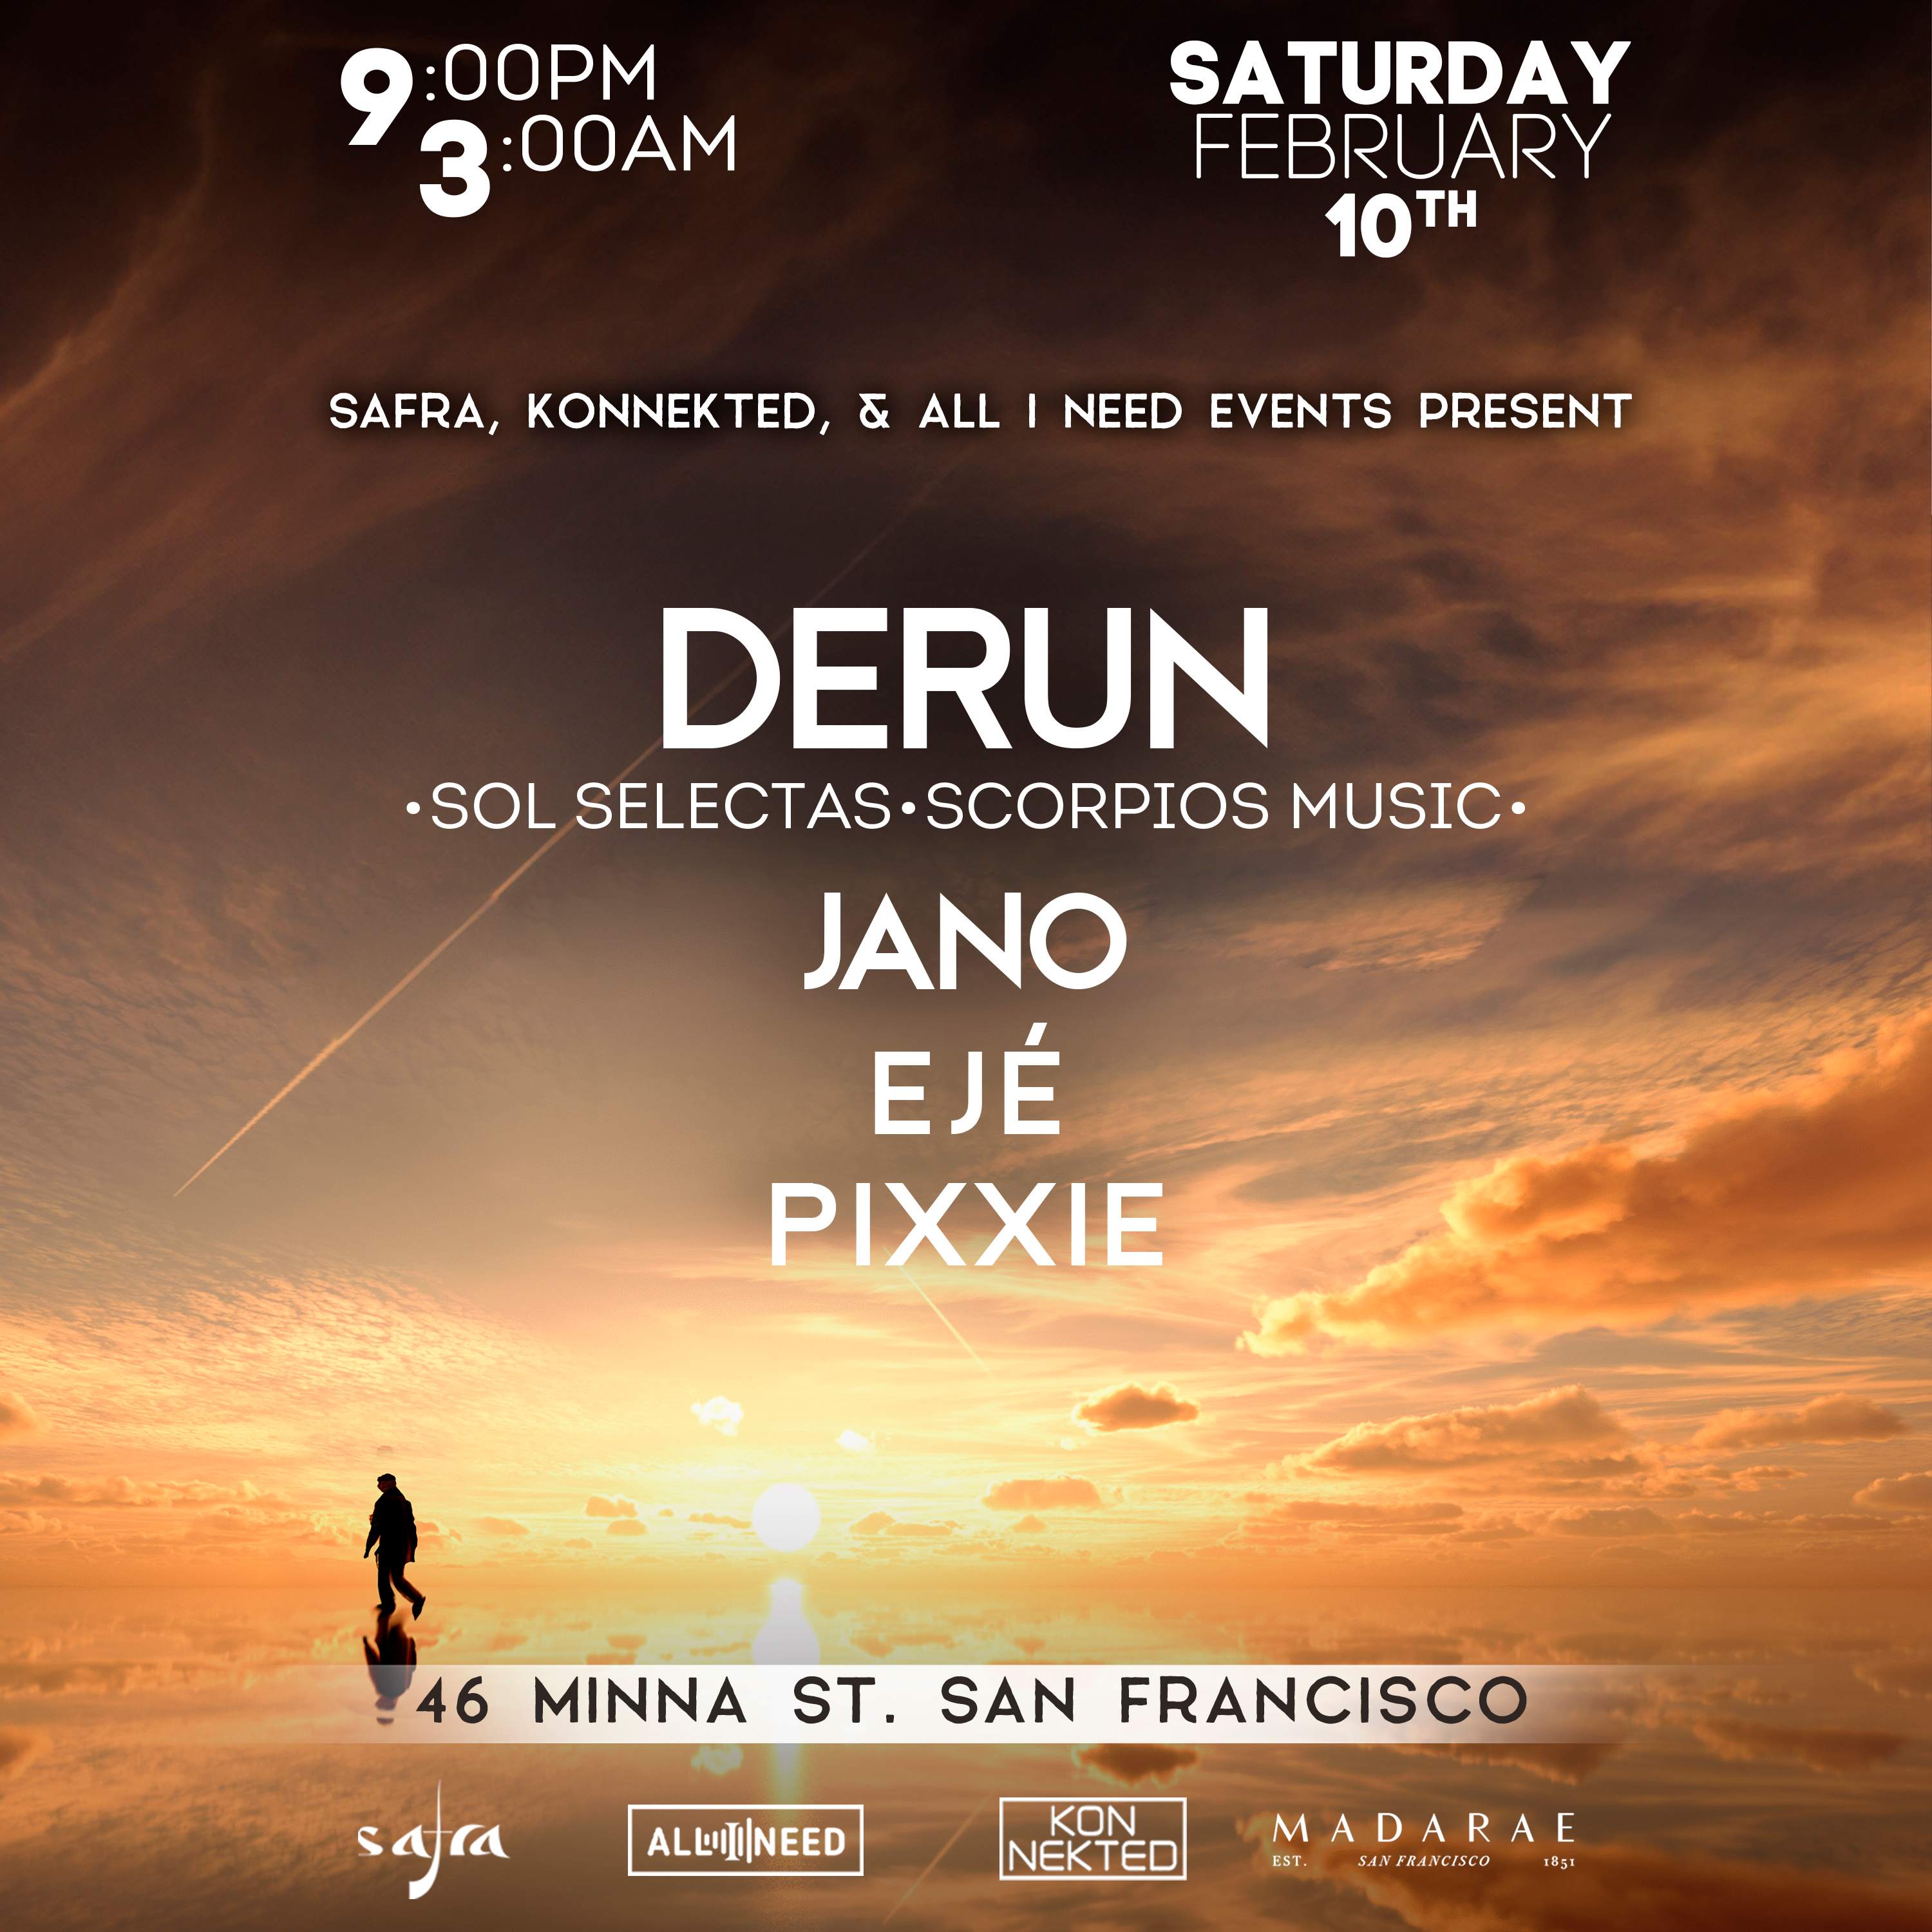 ALL I NEED EVENTS with Derun (Sol Selectas) at Madarae San Francisco - フライヤー表